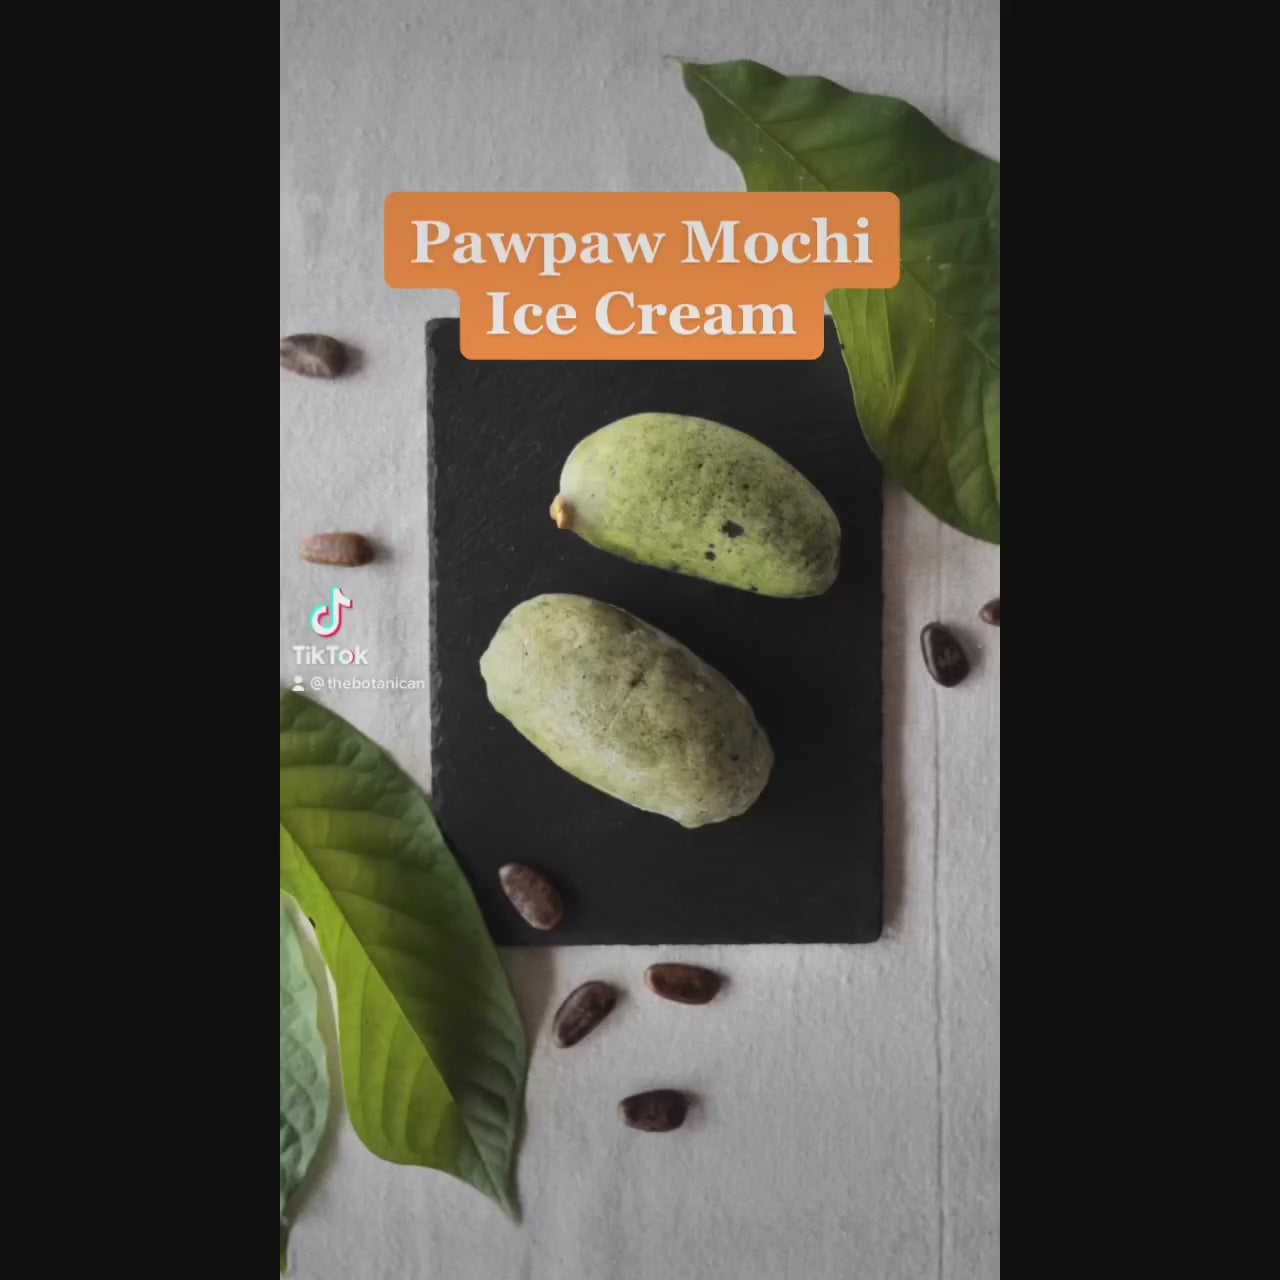 pawpaw-mochi-ice-cream